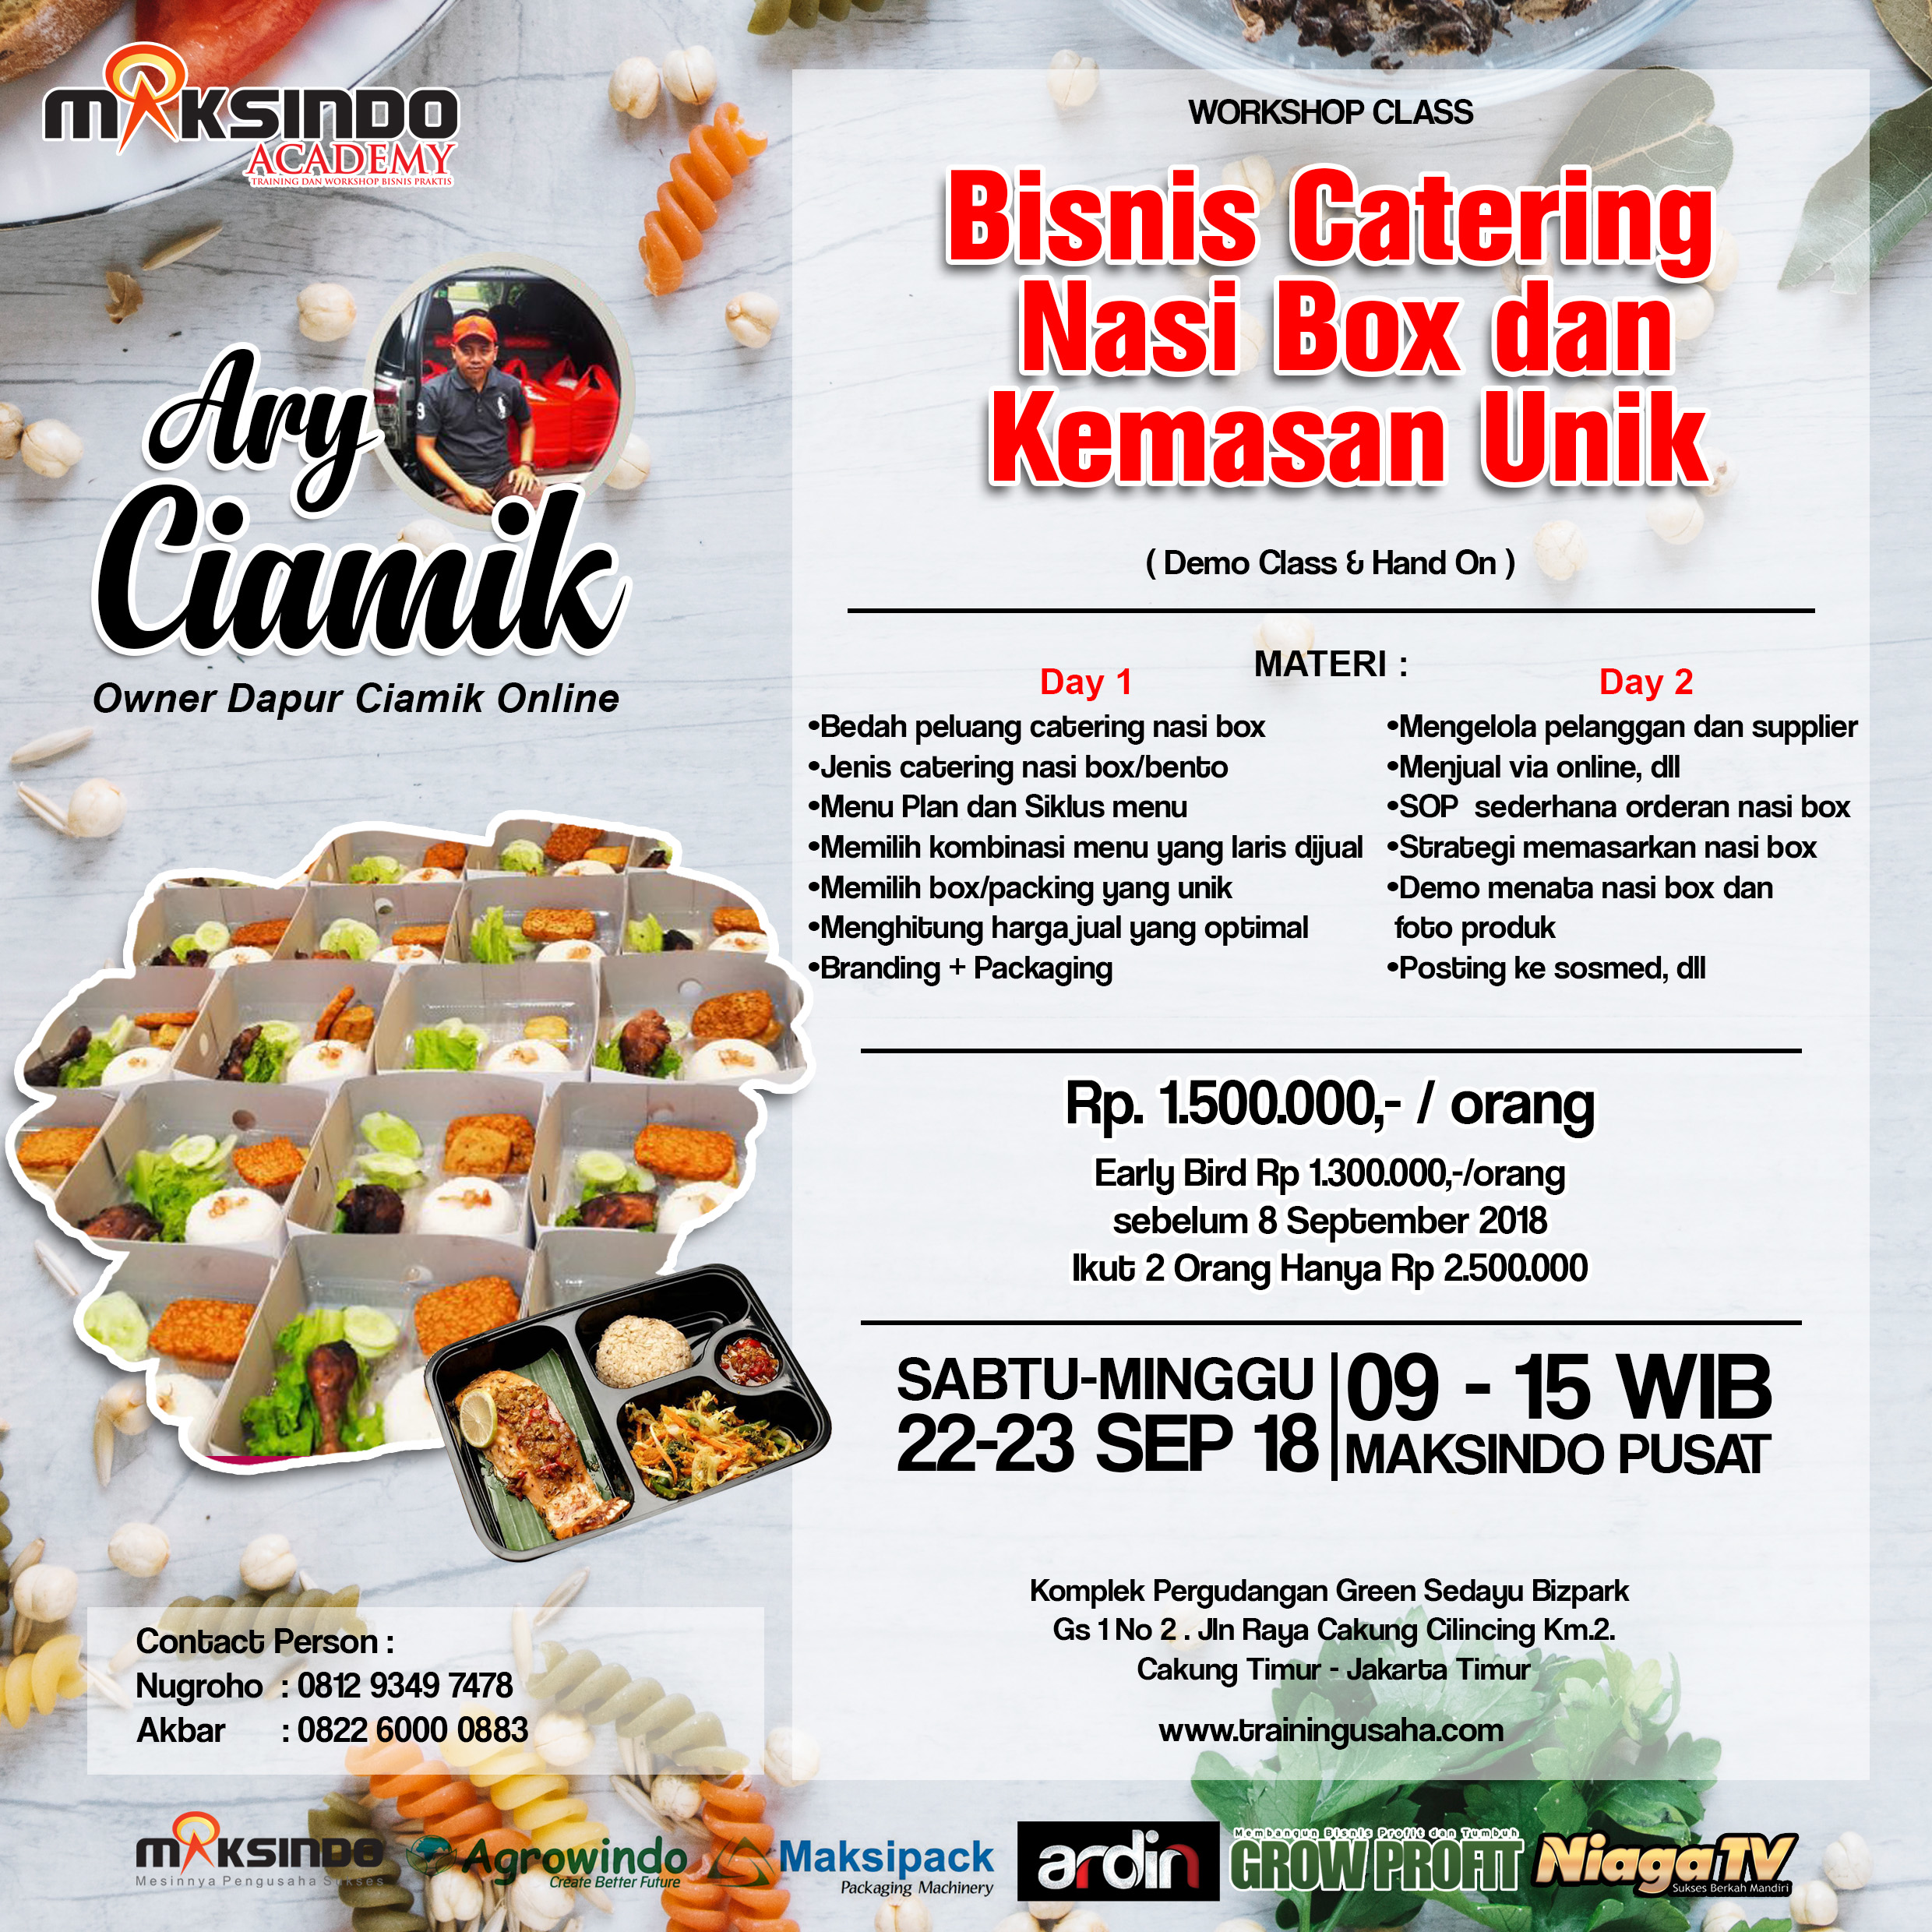 Workshop Class Bisnis Kuliner Catering Nasi Box & Kemasan Unik, 22-23 September 2018